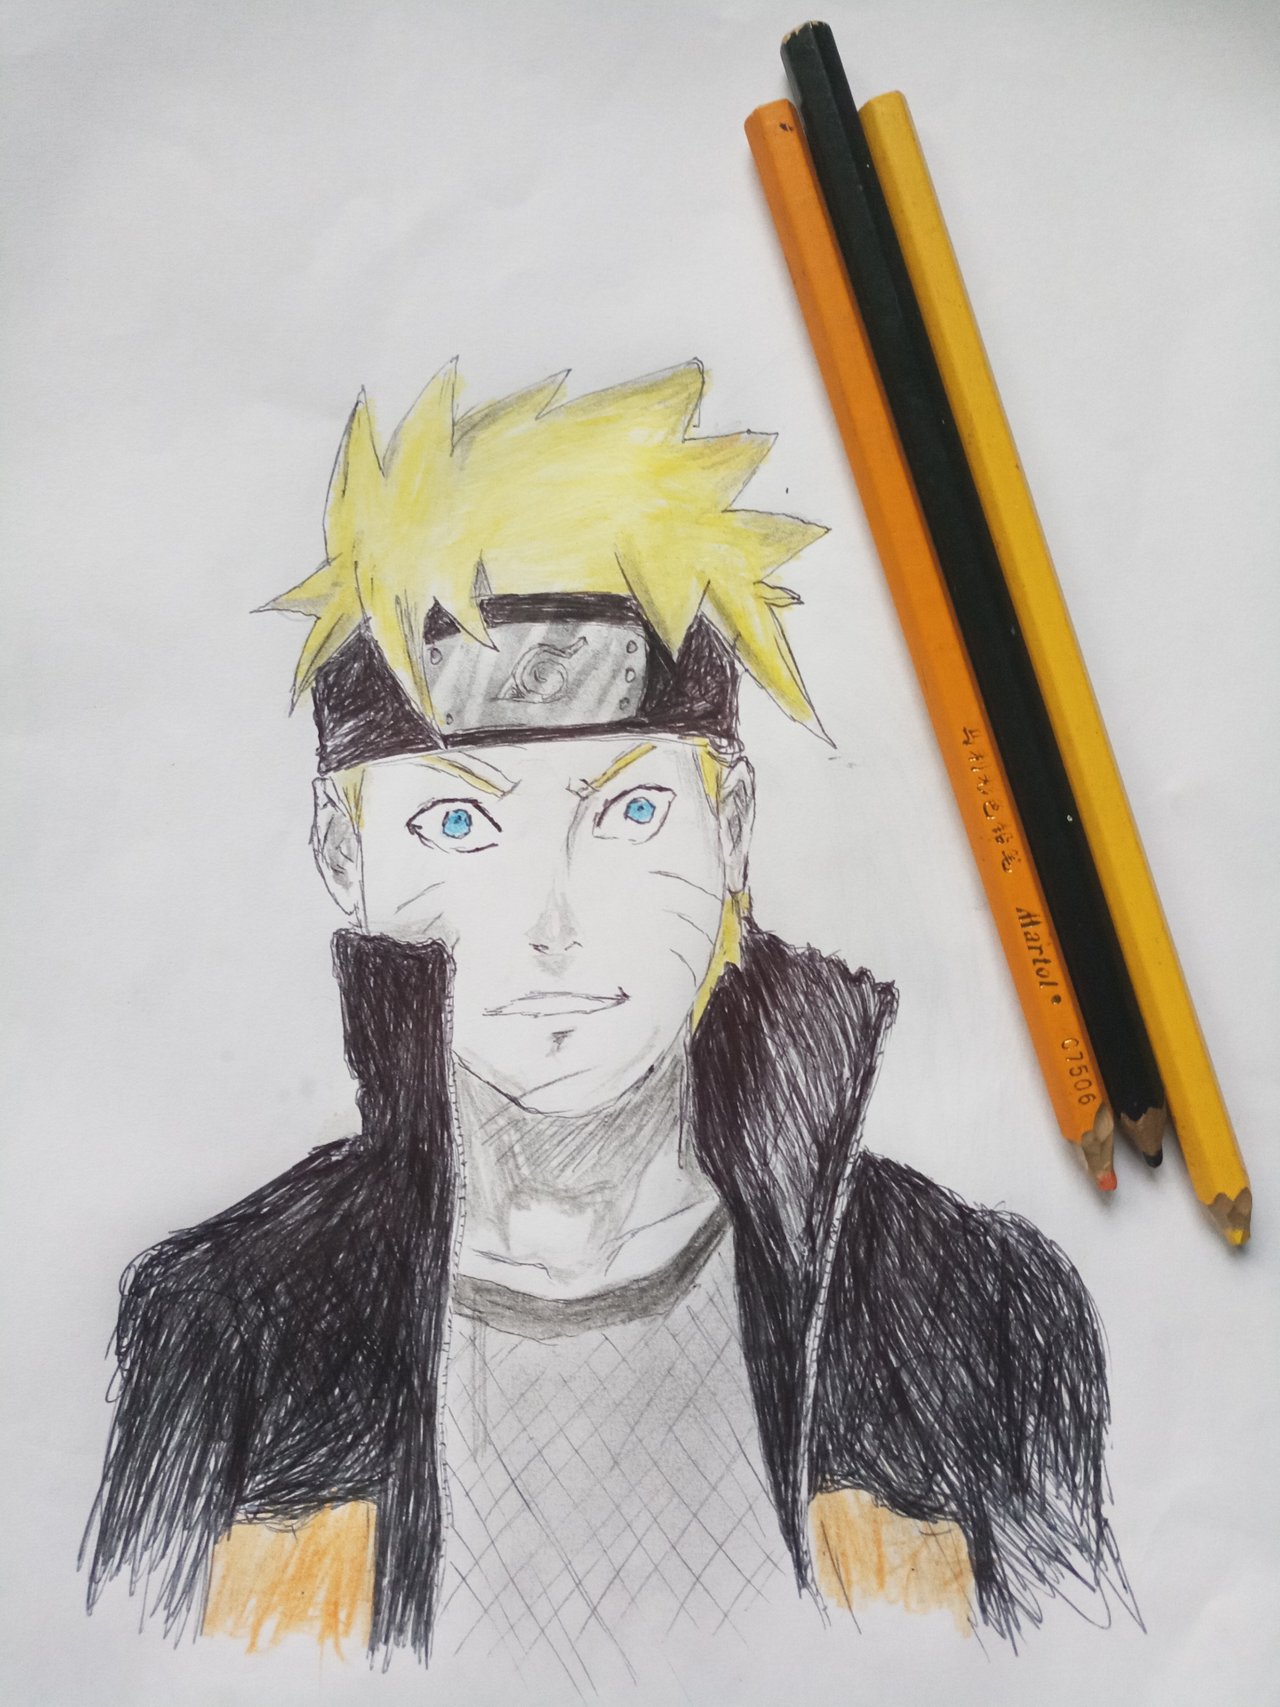 Naruto uzumaki pencil colour drawing by me:-)